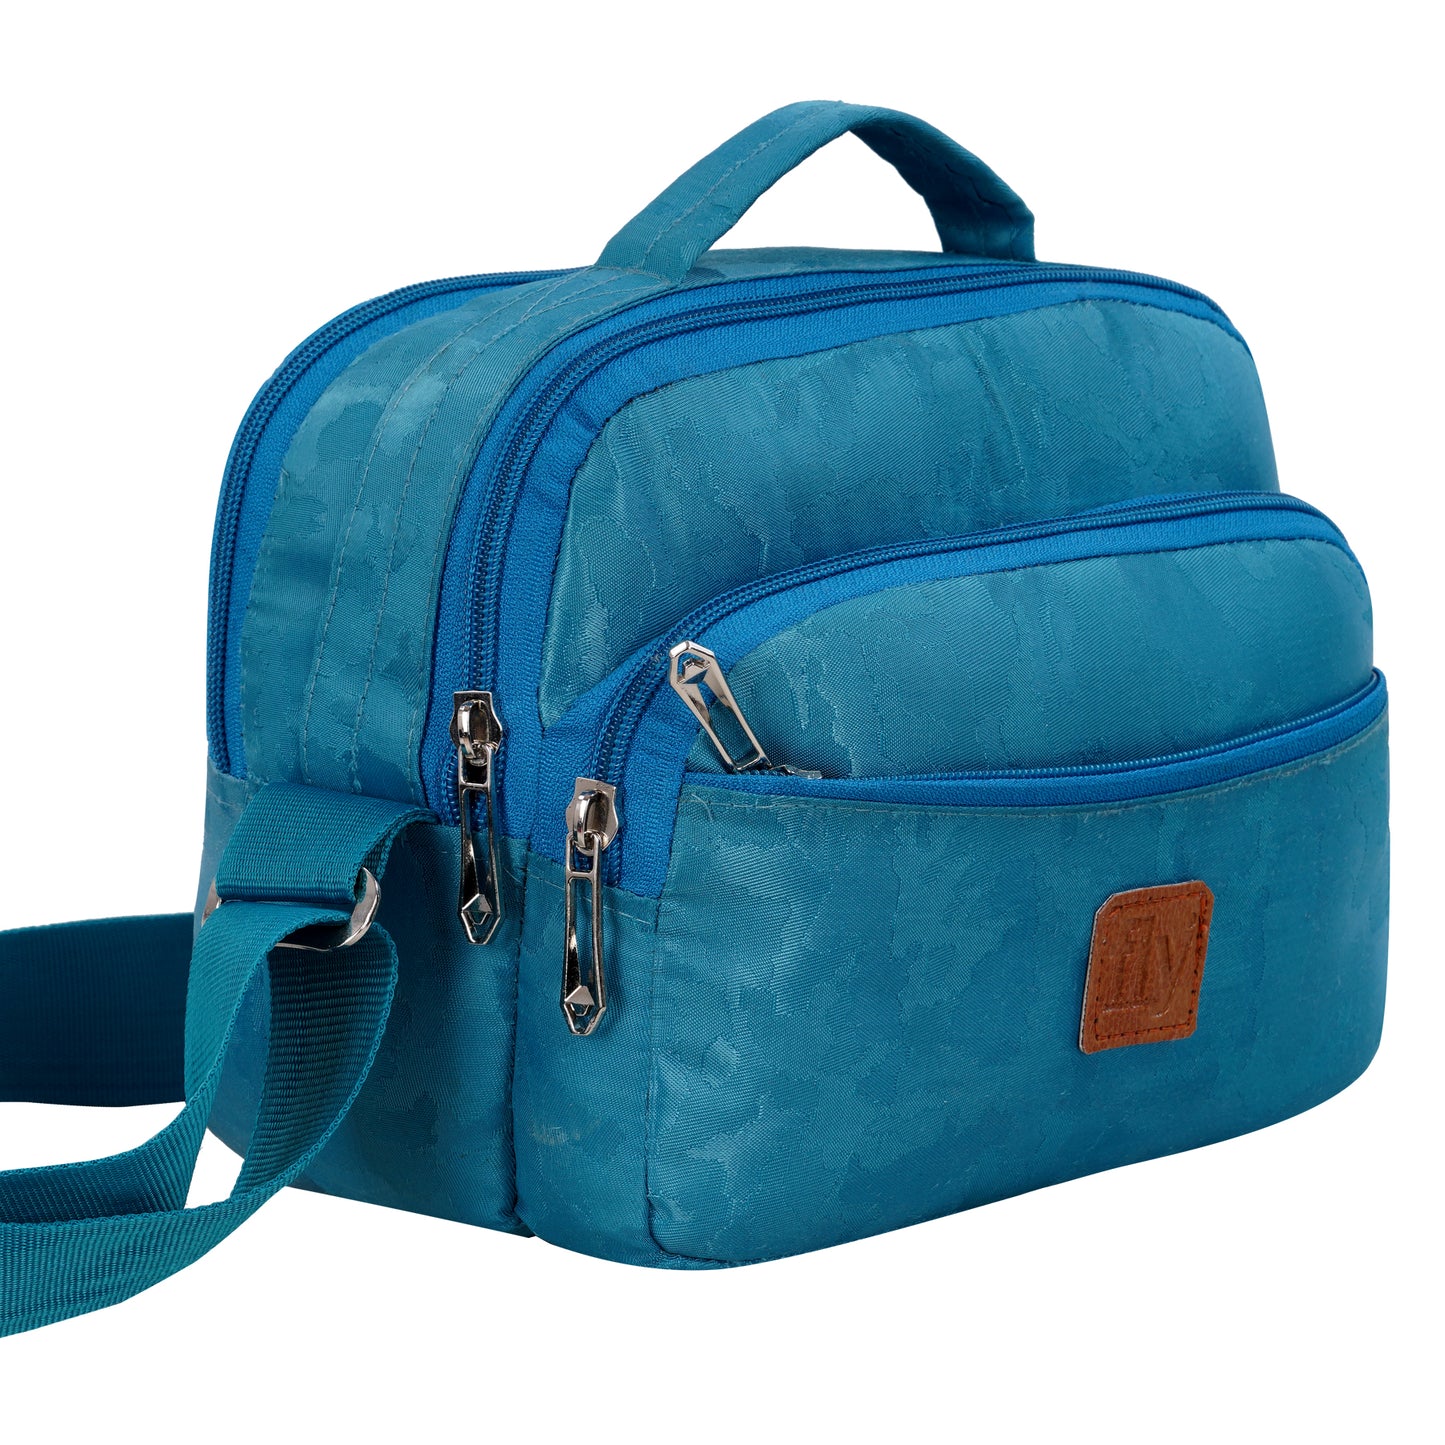 Fly Fashion Sling Bag | Cross-Body Bags With Adjustable Shoulder Strap | Ladies Purse Handbag - Blue